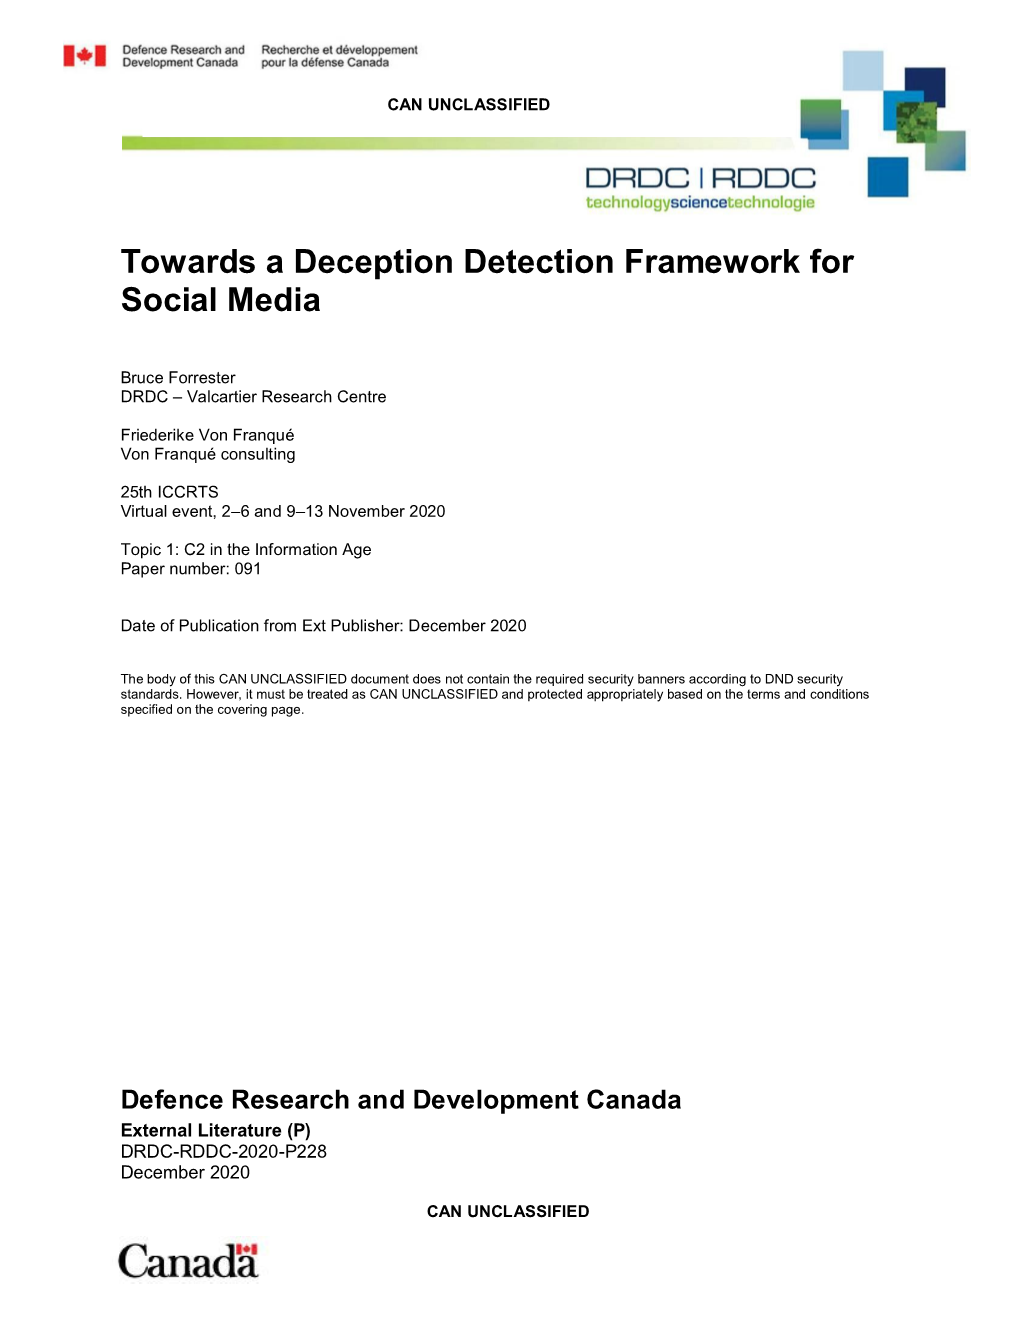 Towards a Deception Detection Framework for Social Media